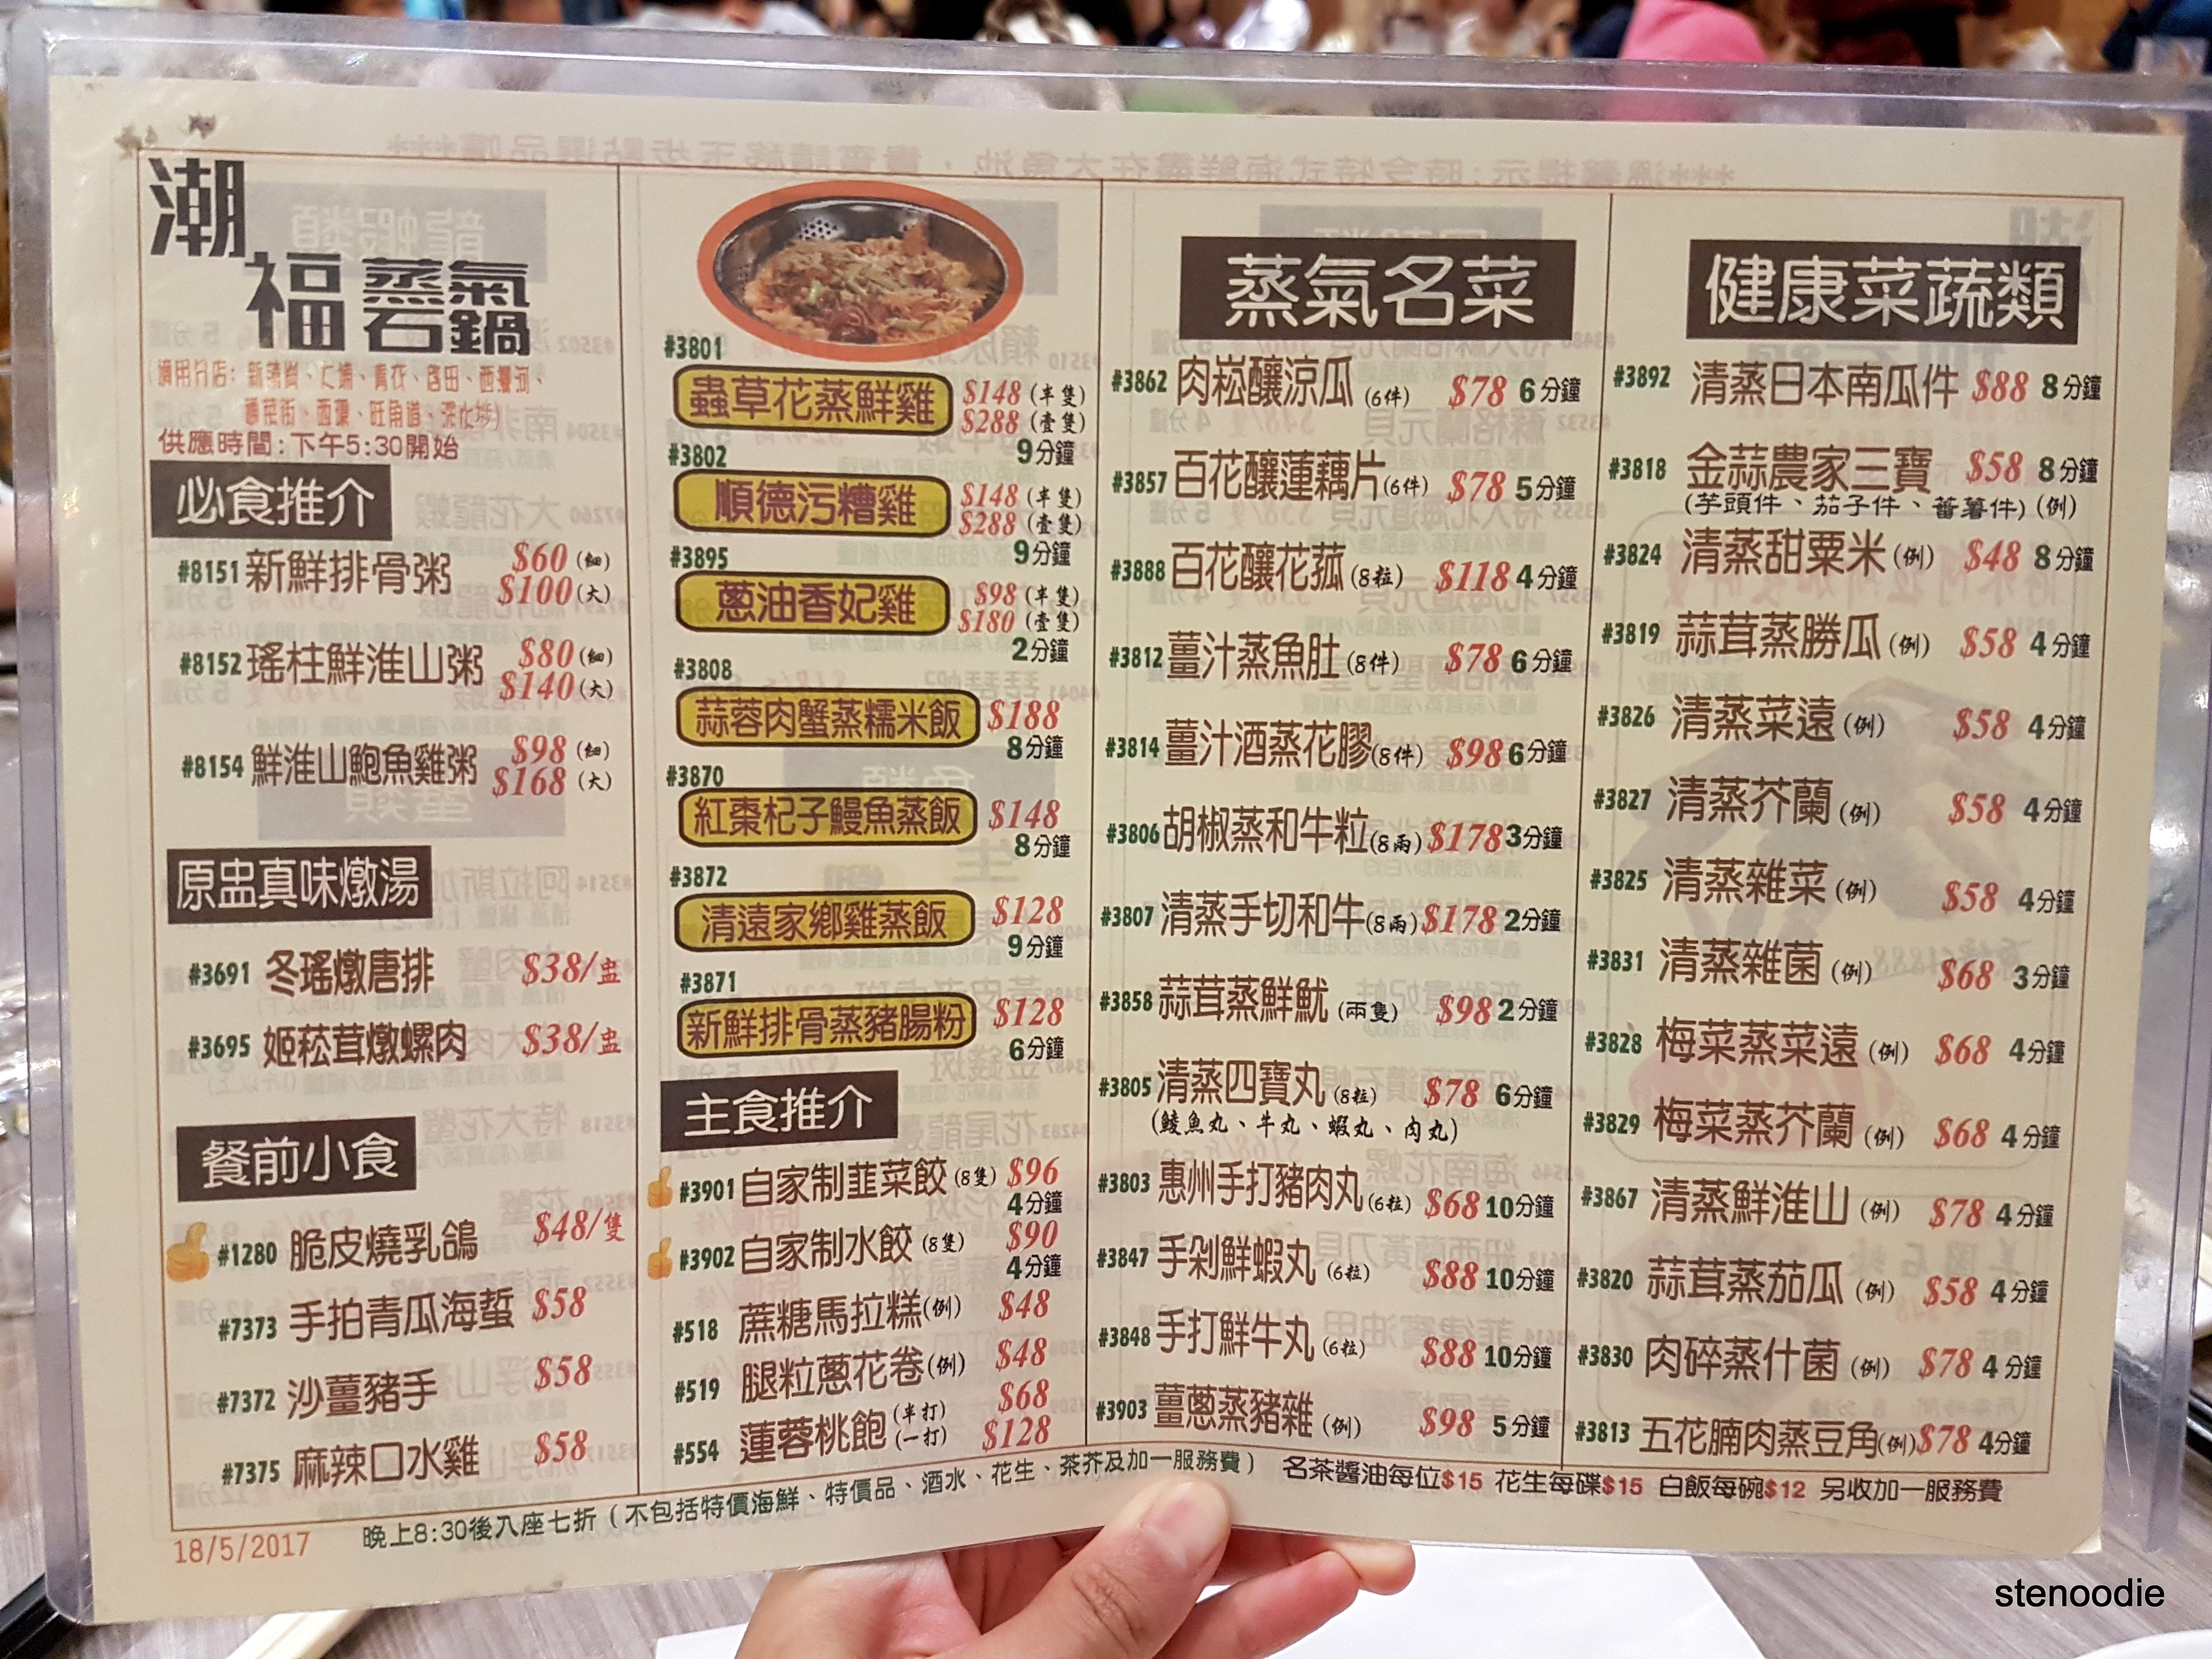  潮福蒸氣石鍋 menu and prices